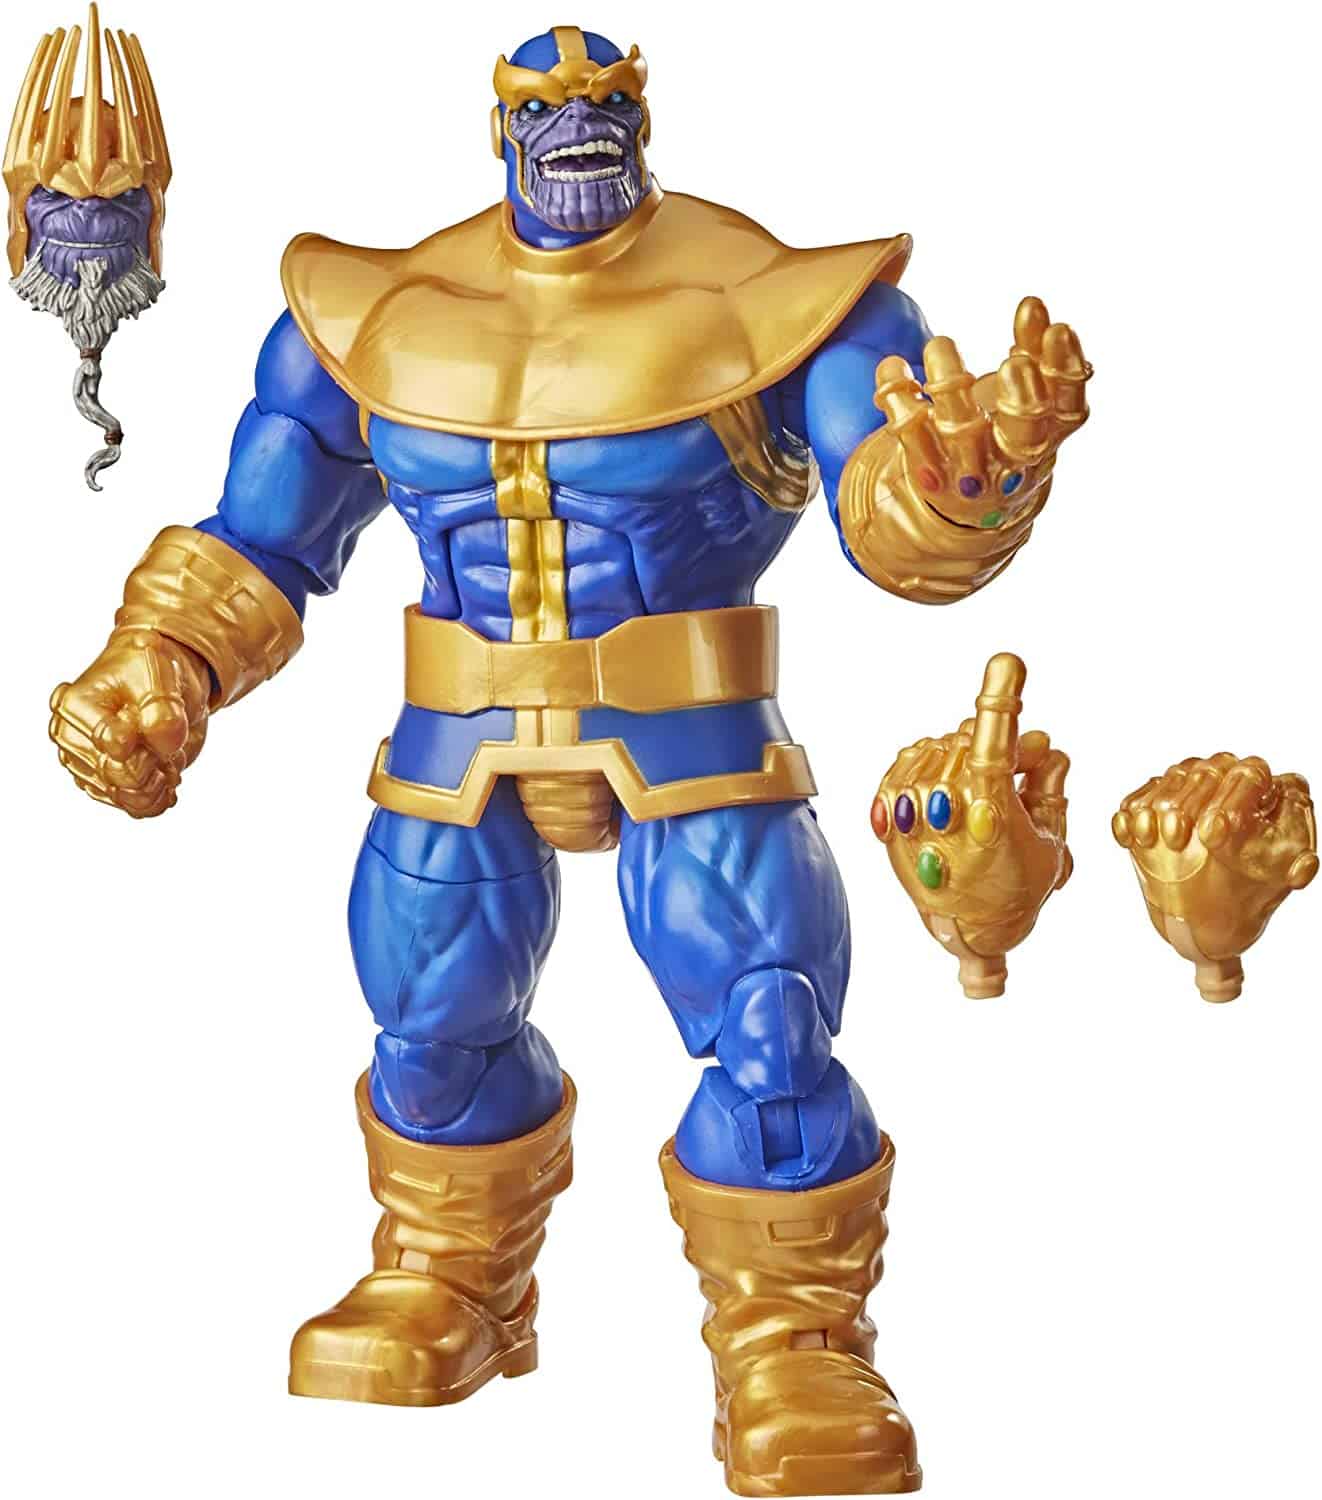 Best Marvel action figure for stop motion- Marvel Legends Series Thanos